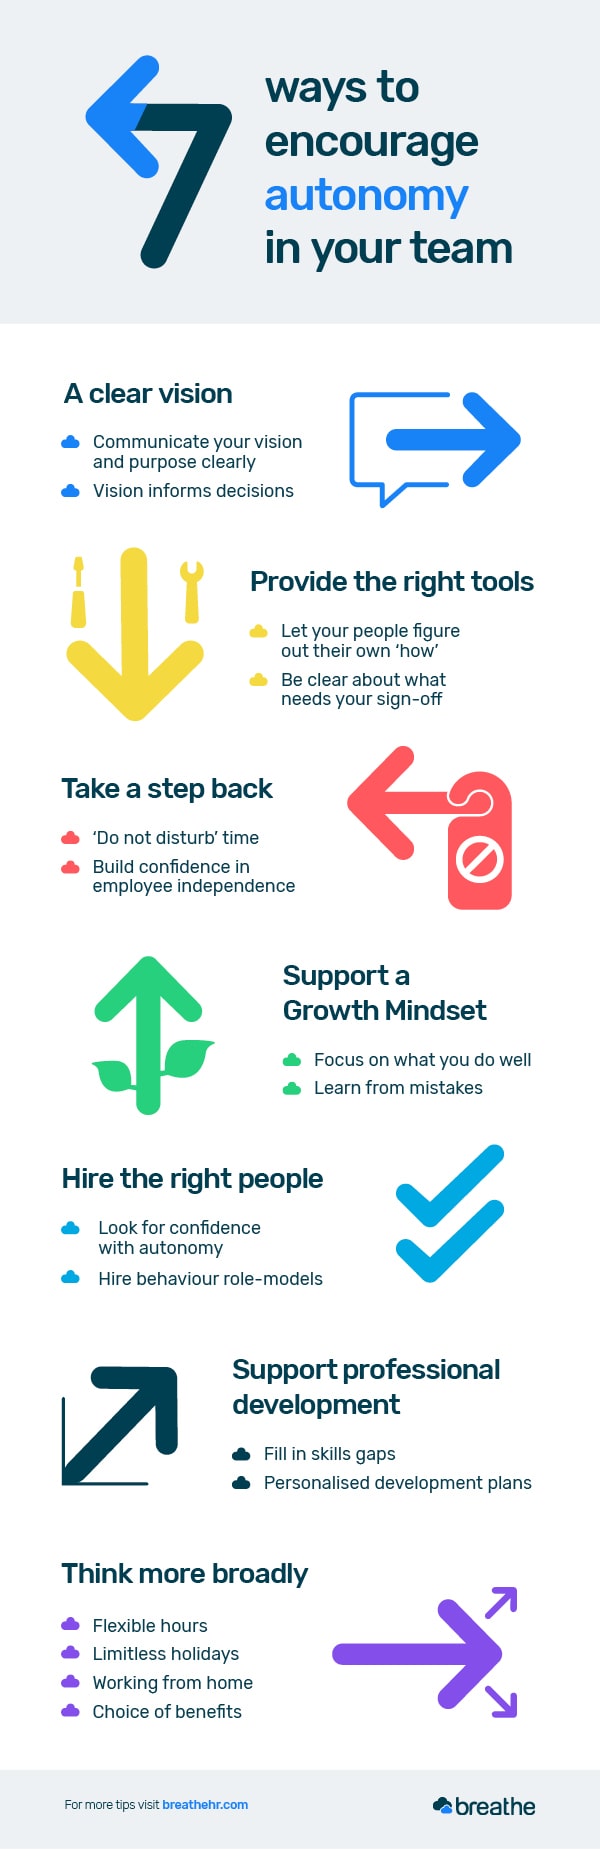 7 ways to encourage autonomy in your team infographic